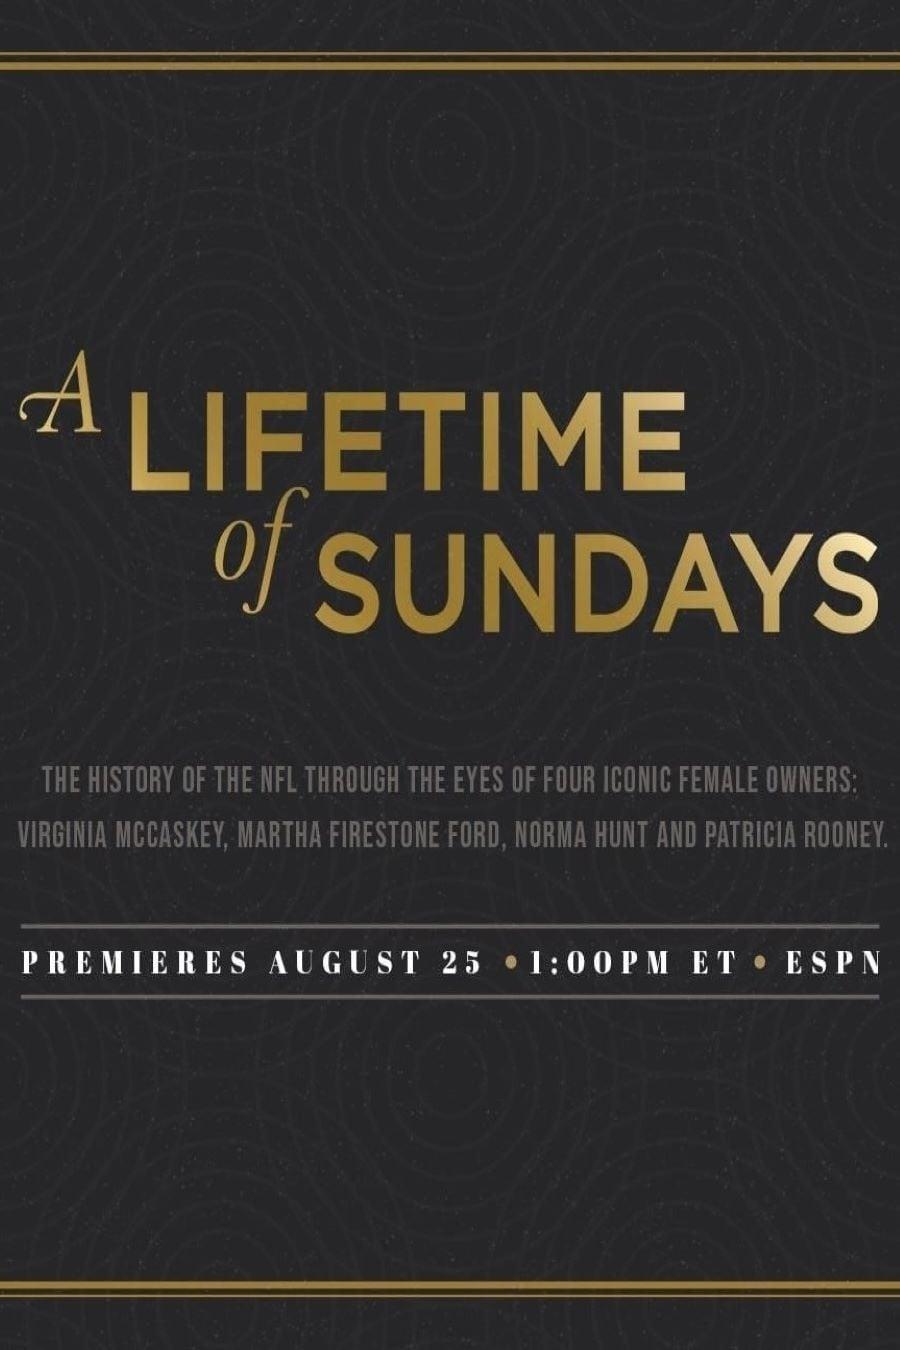 A Lifetime of Sundays poster